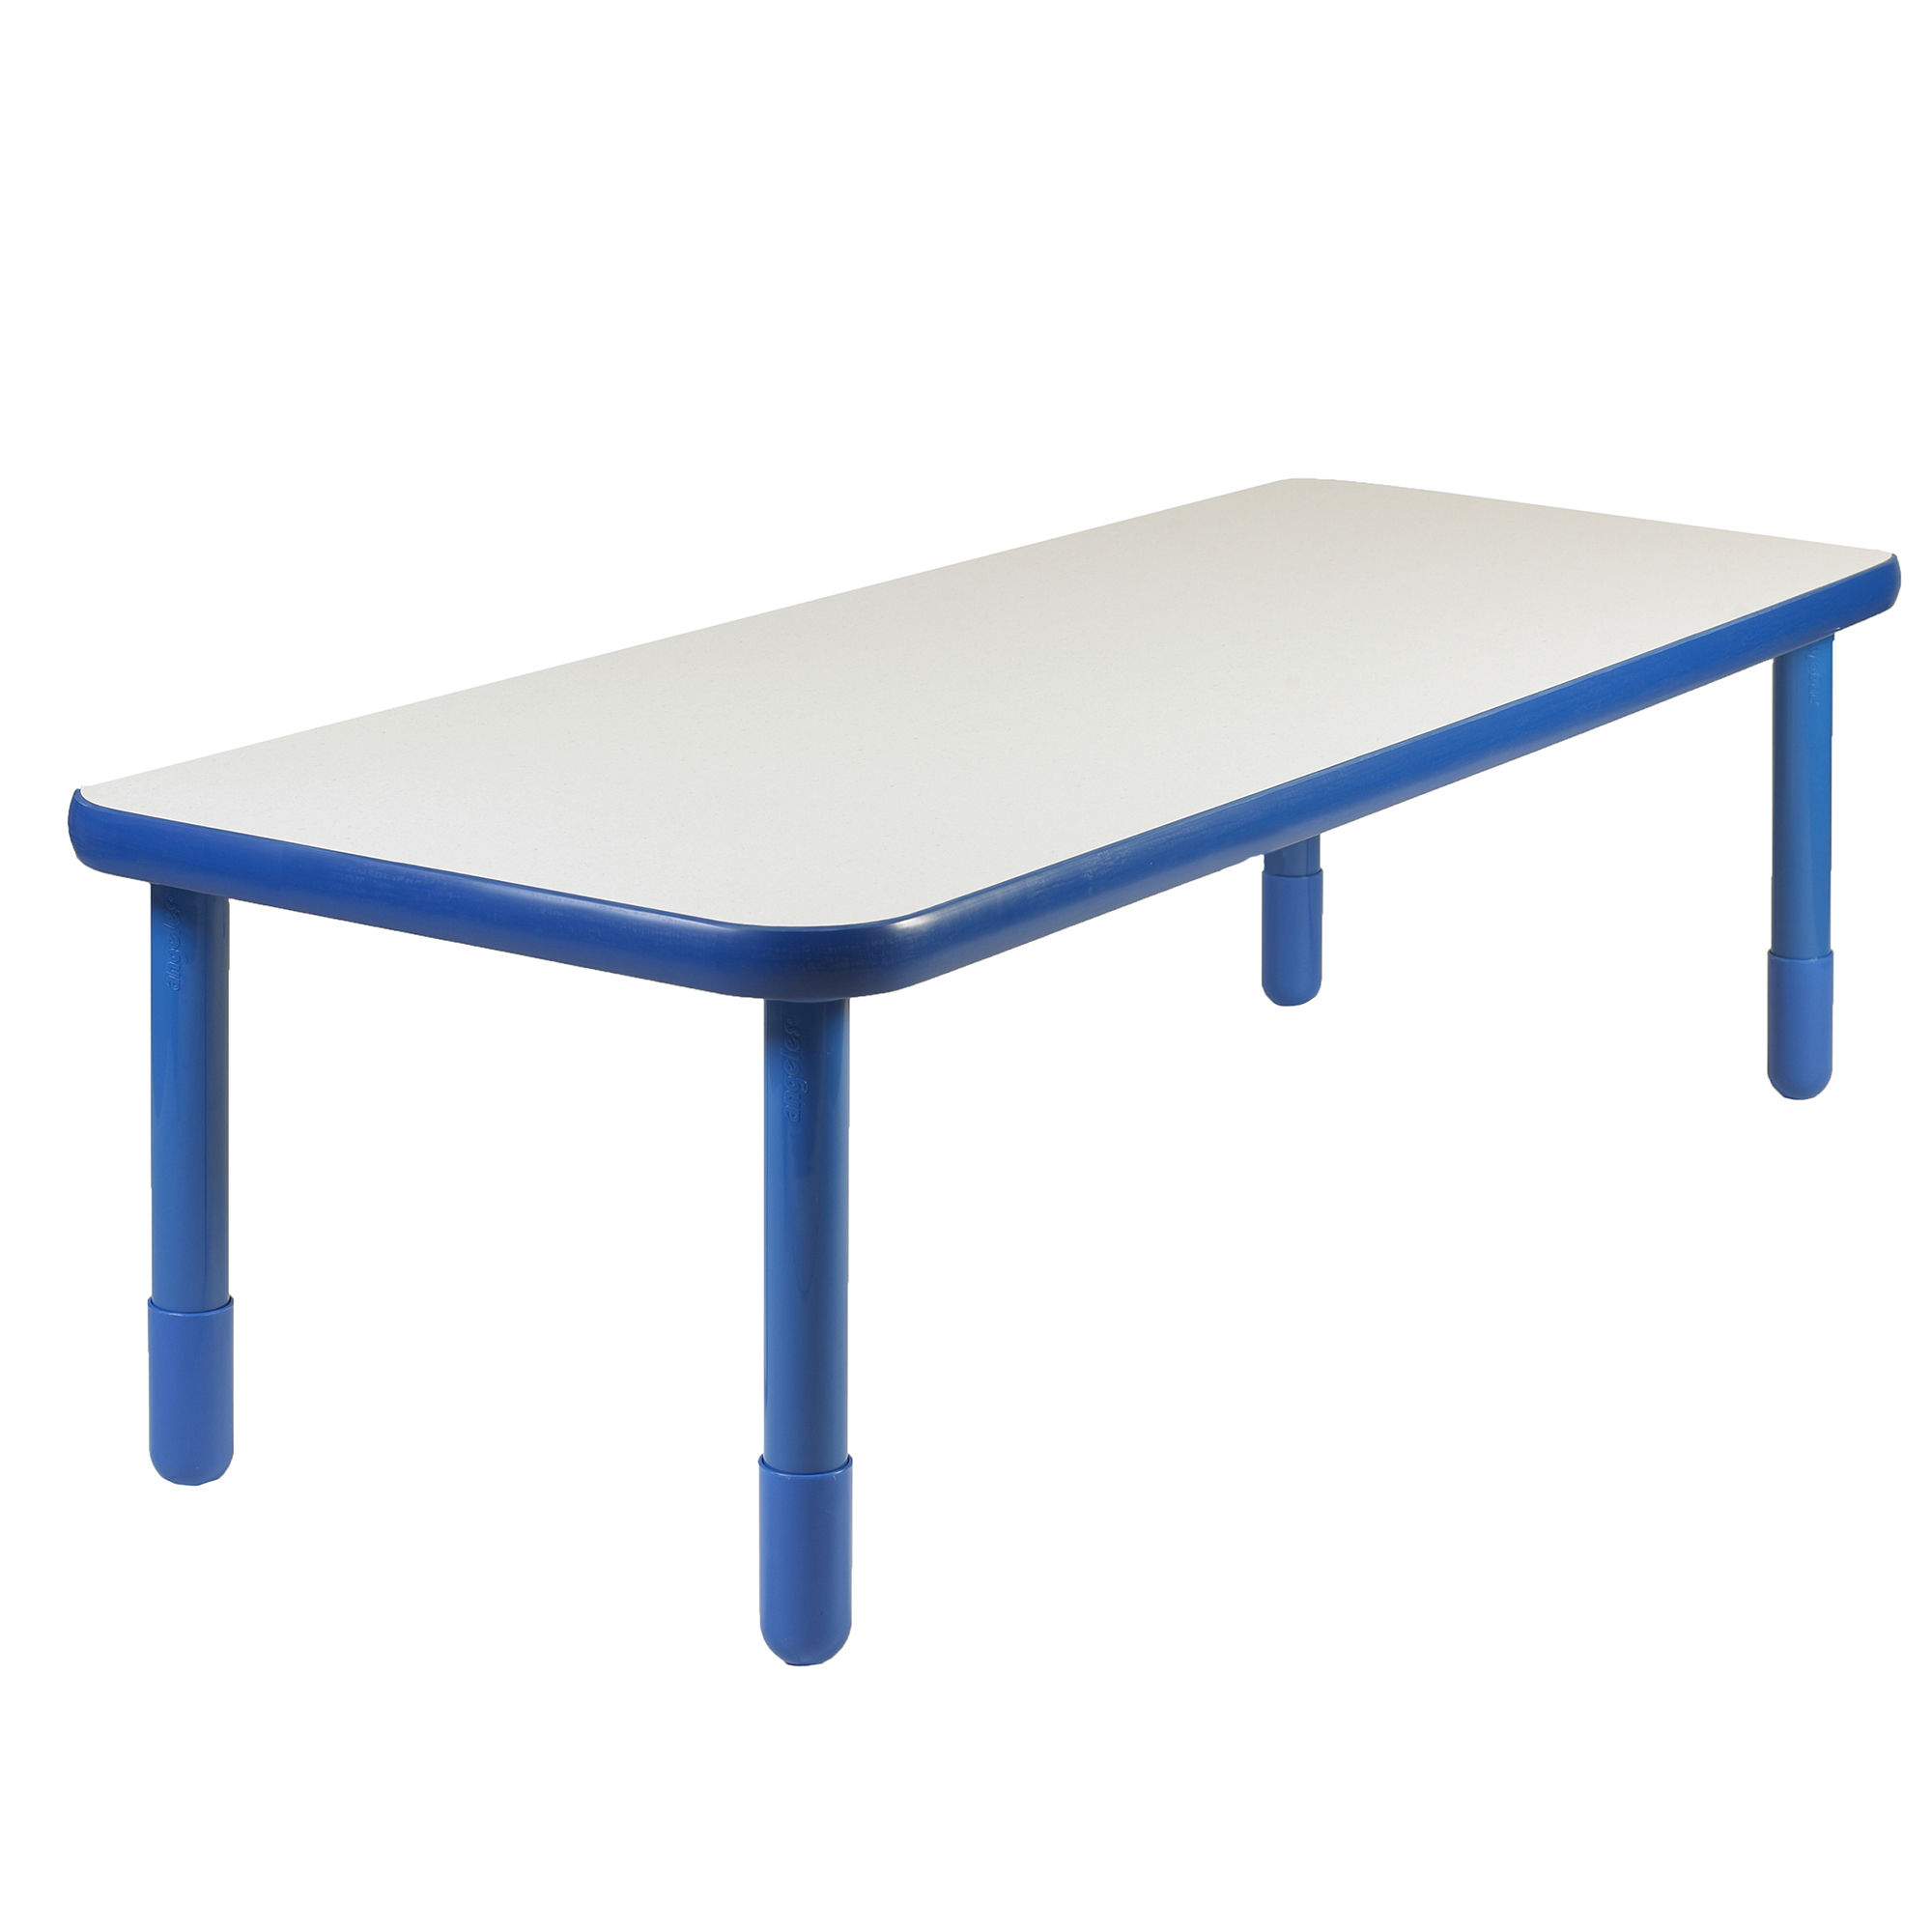 BaseLine® 183 cm  x 76 cm  Rectangular Table - Royal Blue with 56 cm  Legs